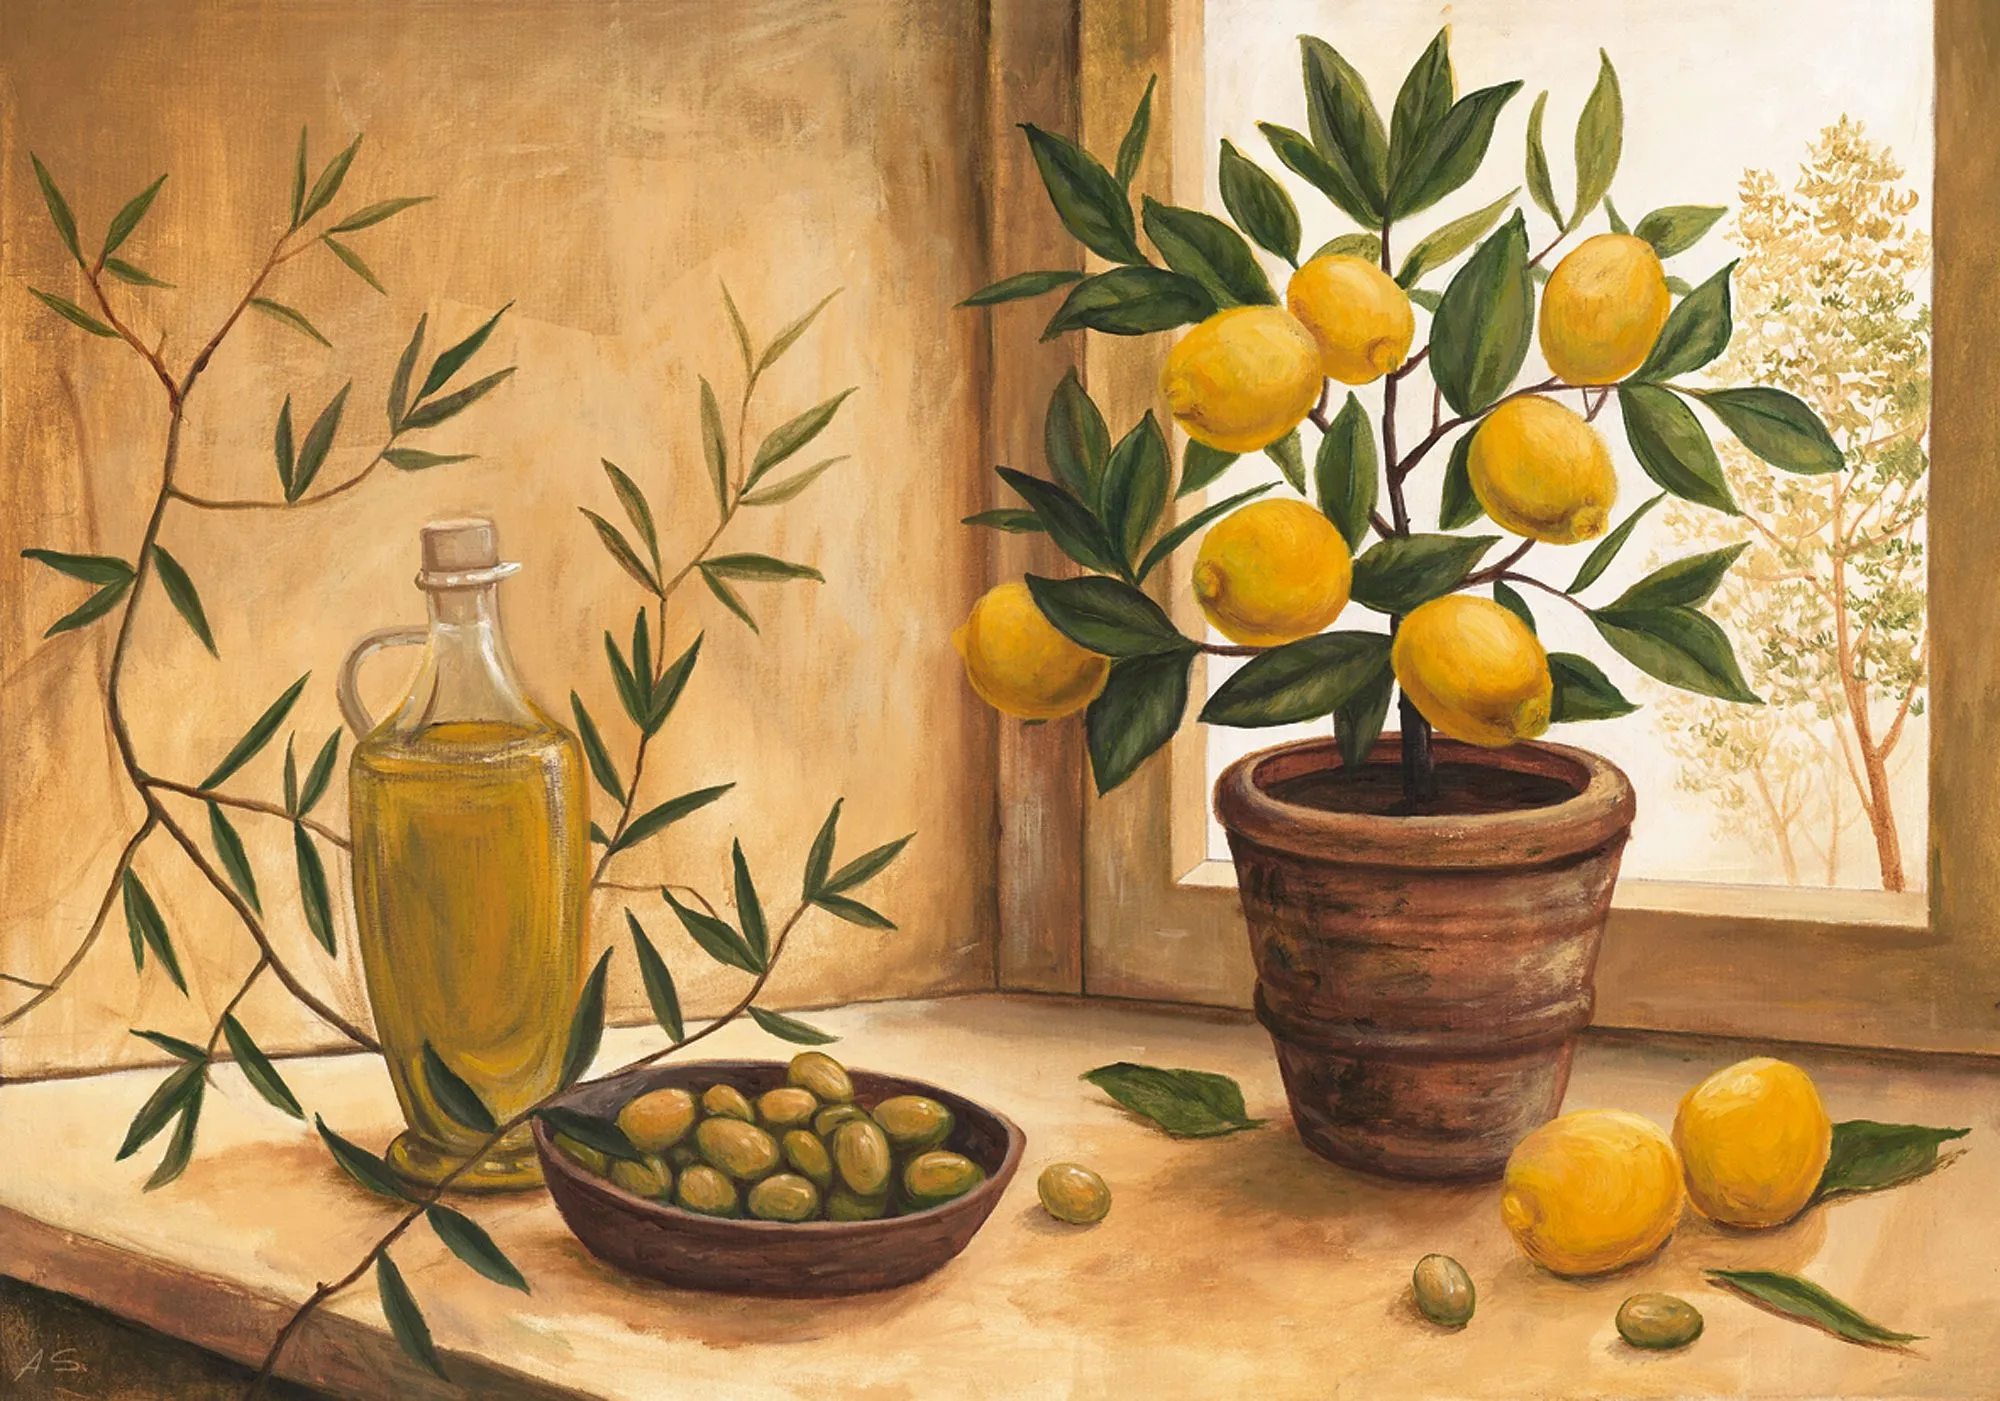 Kunstdruck HOME AFFAIRE "A. S.: Olive and lime" Bilder Gr. B/H: 99 cm x 69 cm, beige (cremefarben) Kunstdrucke 9969 cm